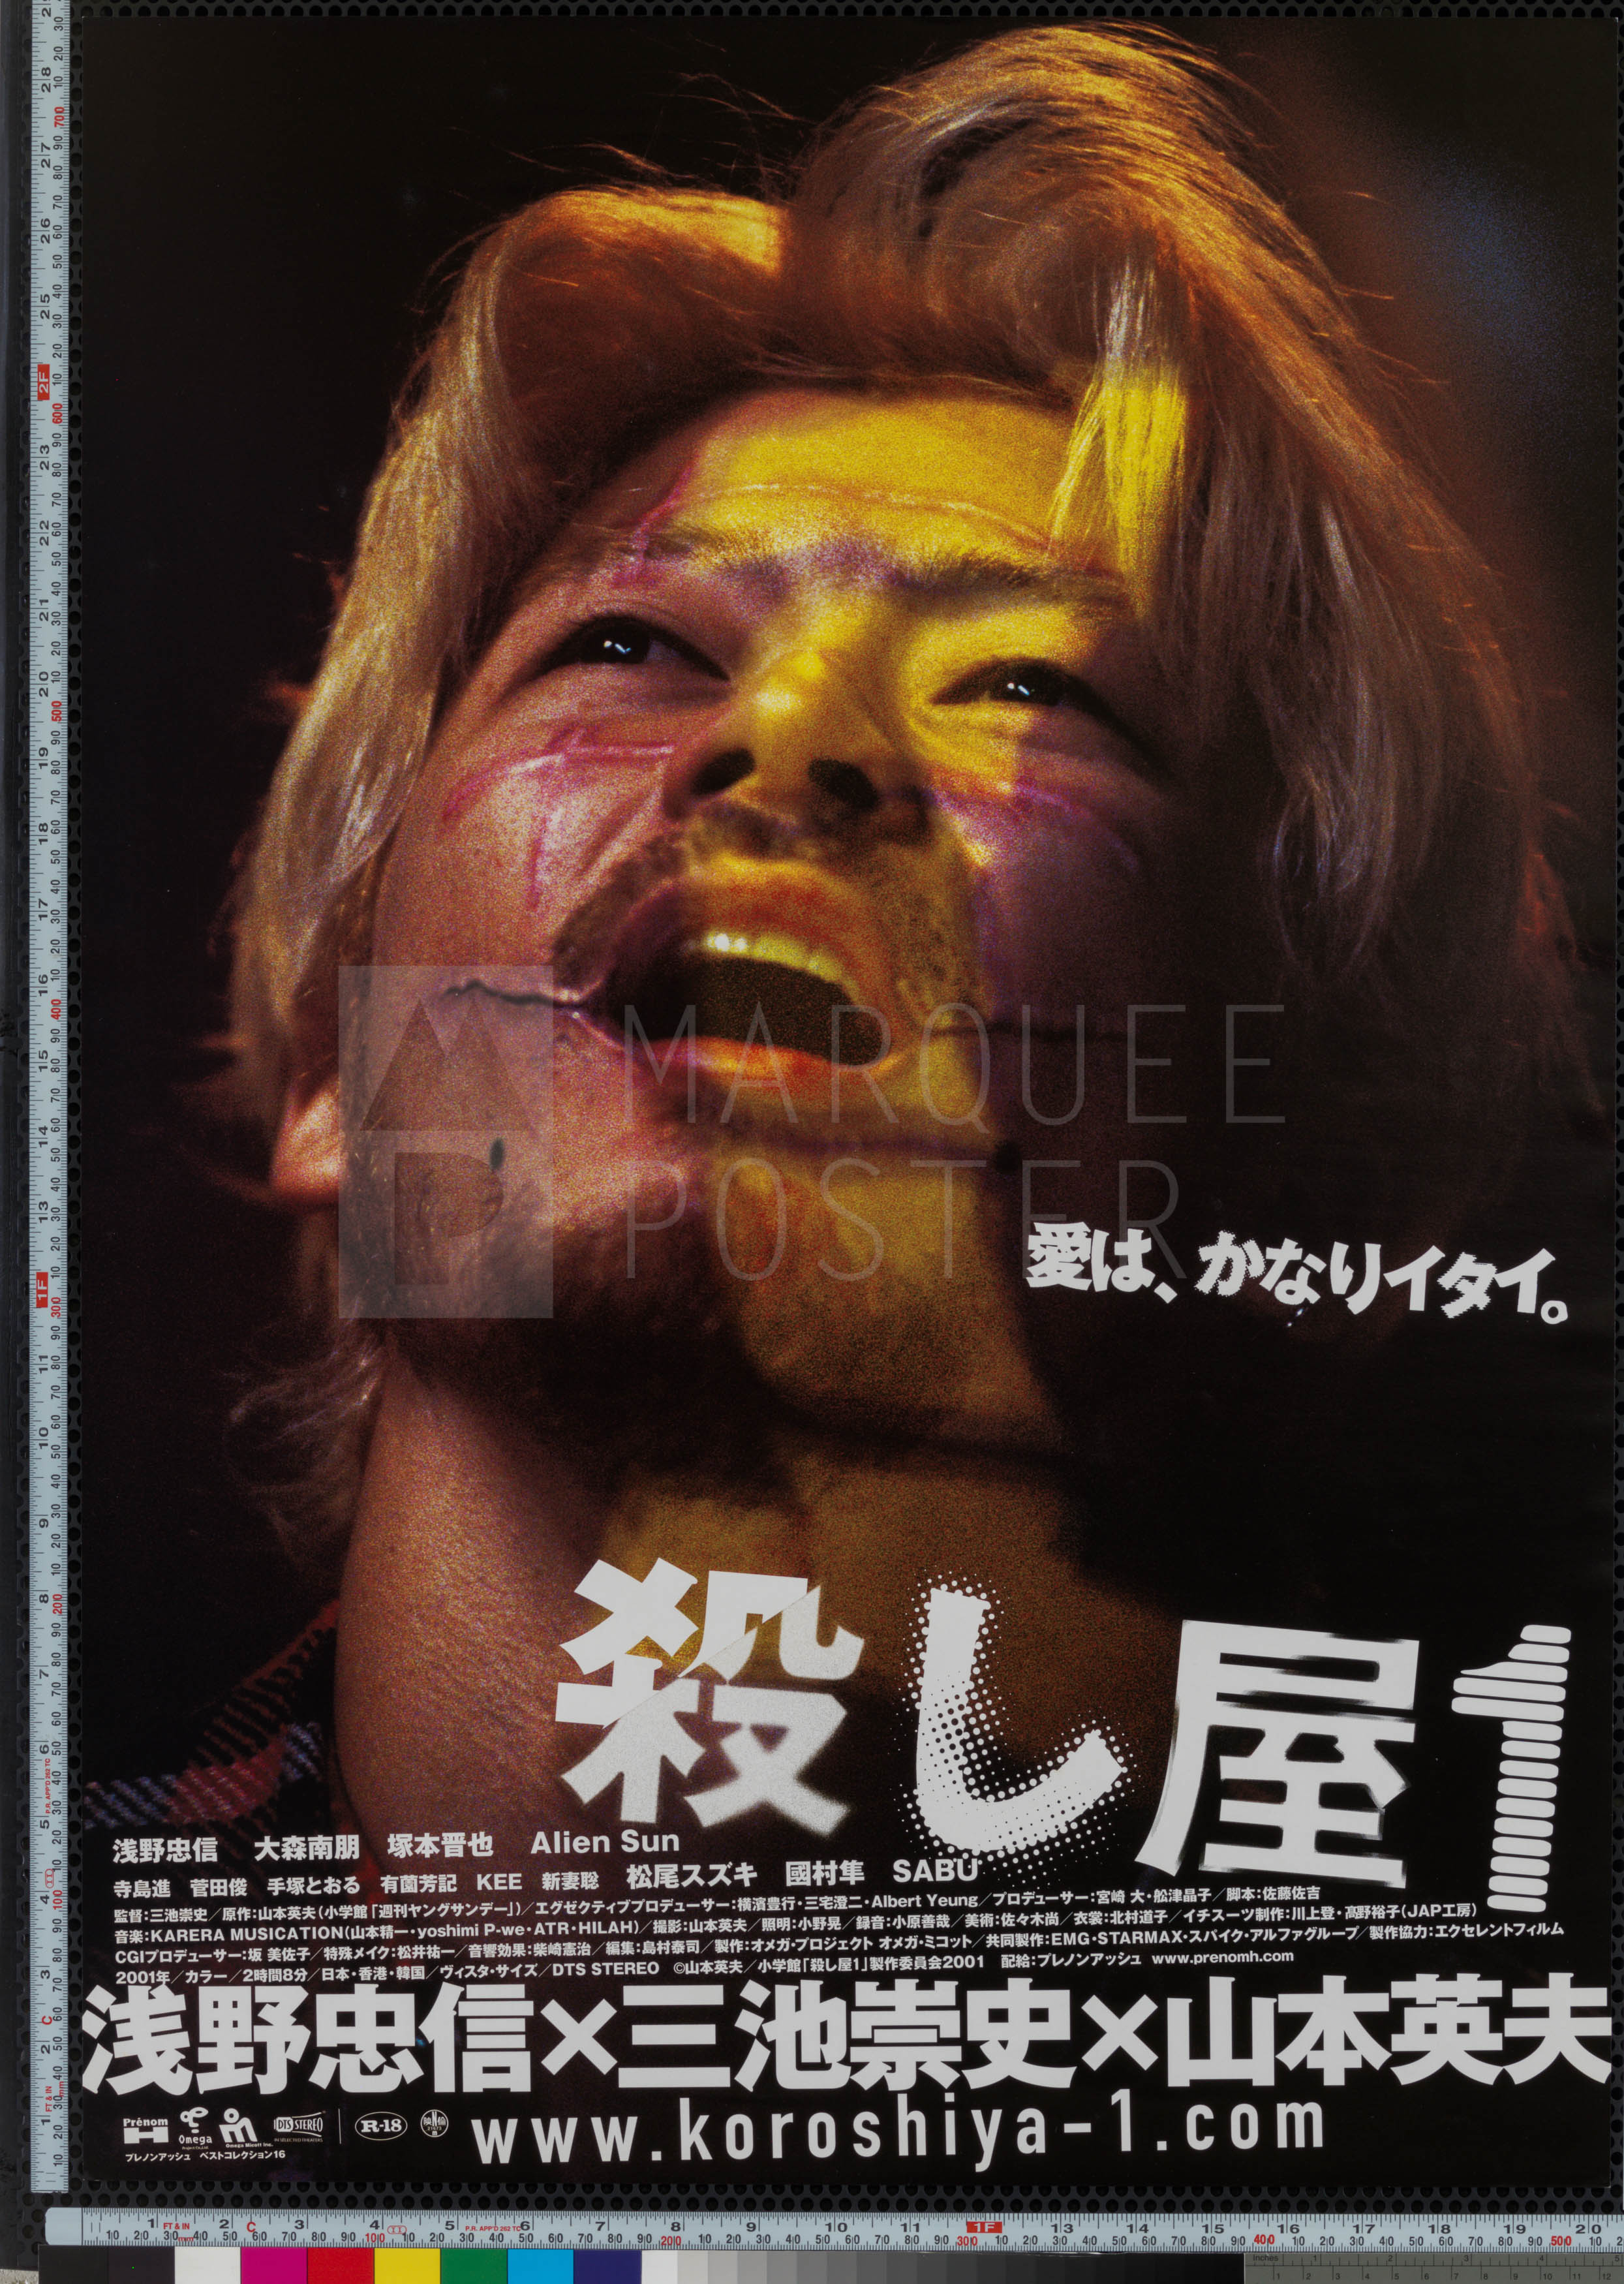 62-ichi-the-killer-face-style-japanese-b2-2001-02